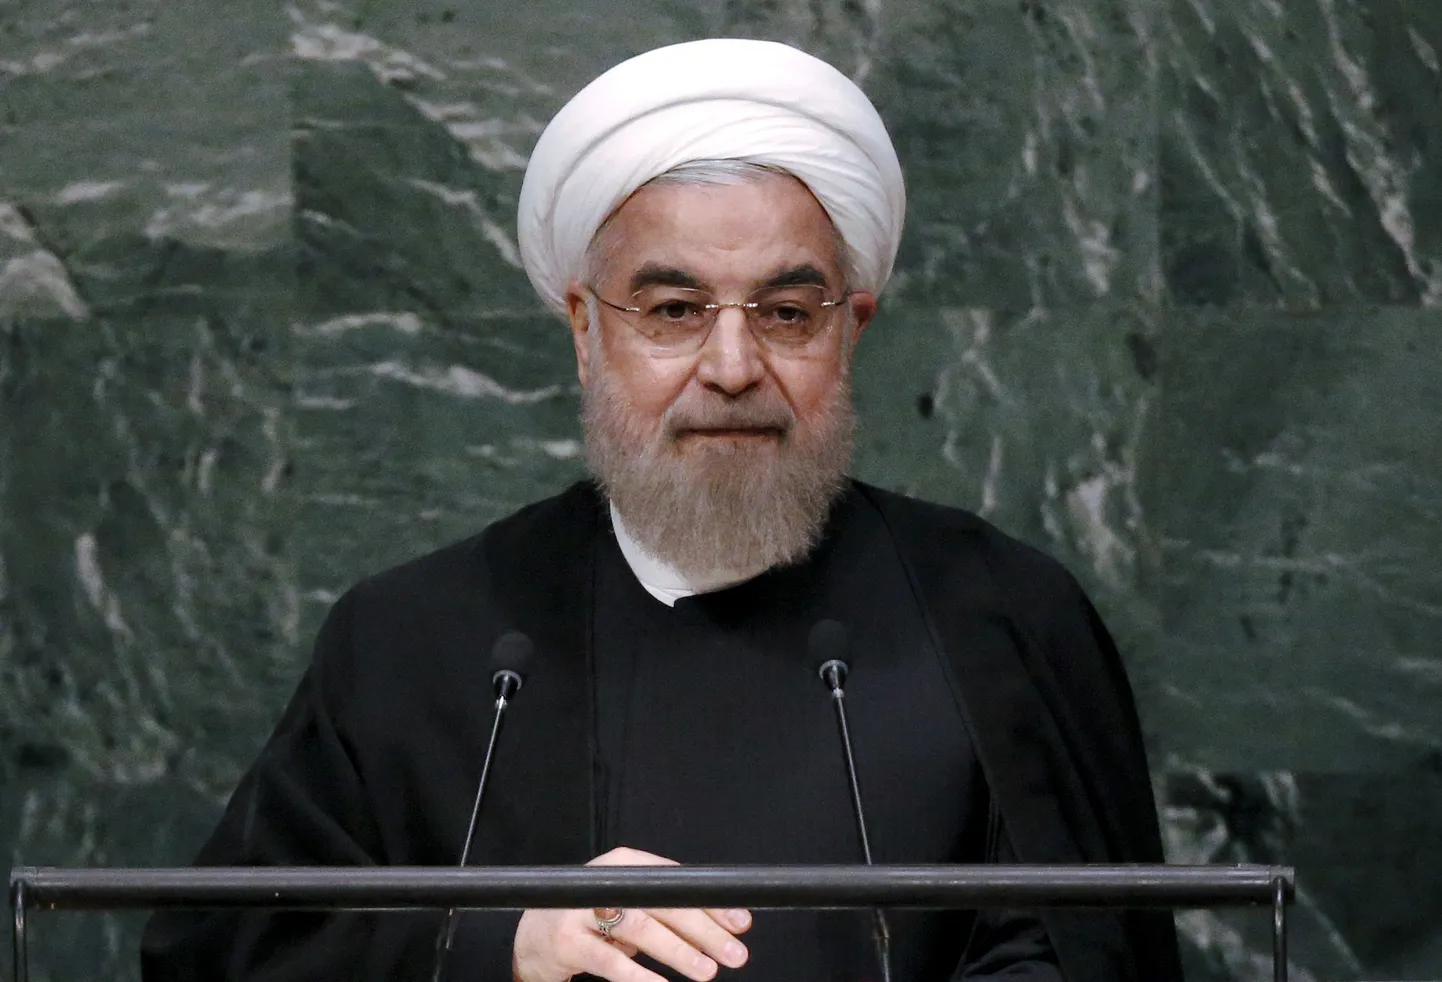 Hassan Rouhani.